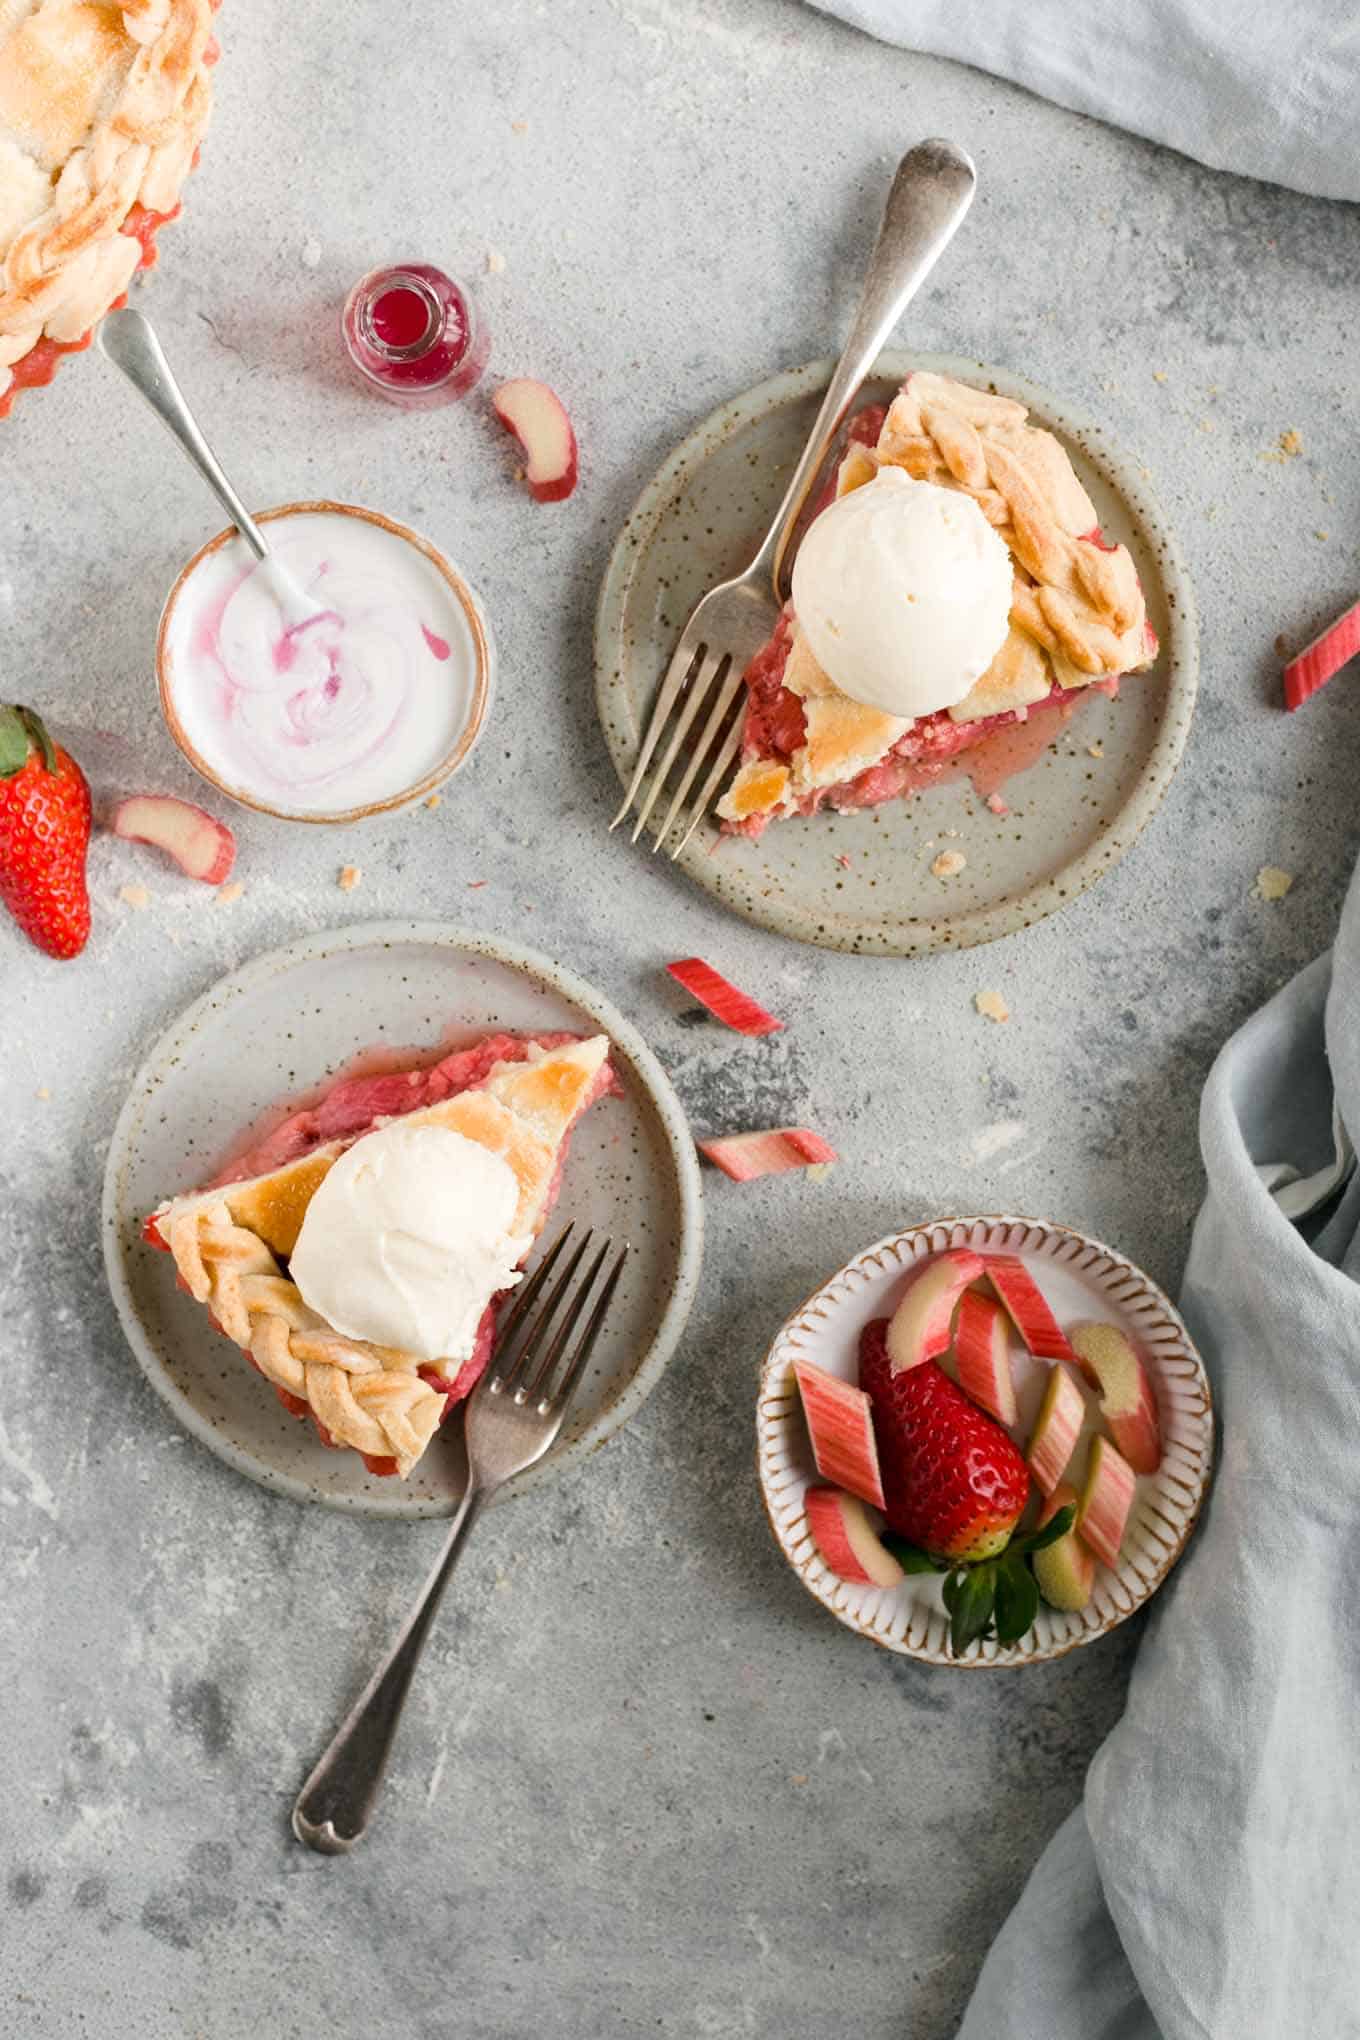 Rhubarb strawberry pie with ice cream. Delicious pie, full of classic flavours! #vegan #vegetarian #rhubarb #pie | via @annabanana.co